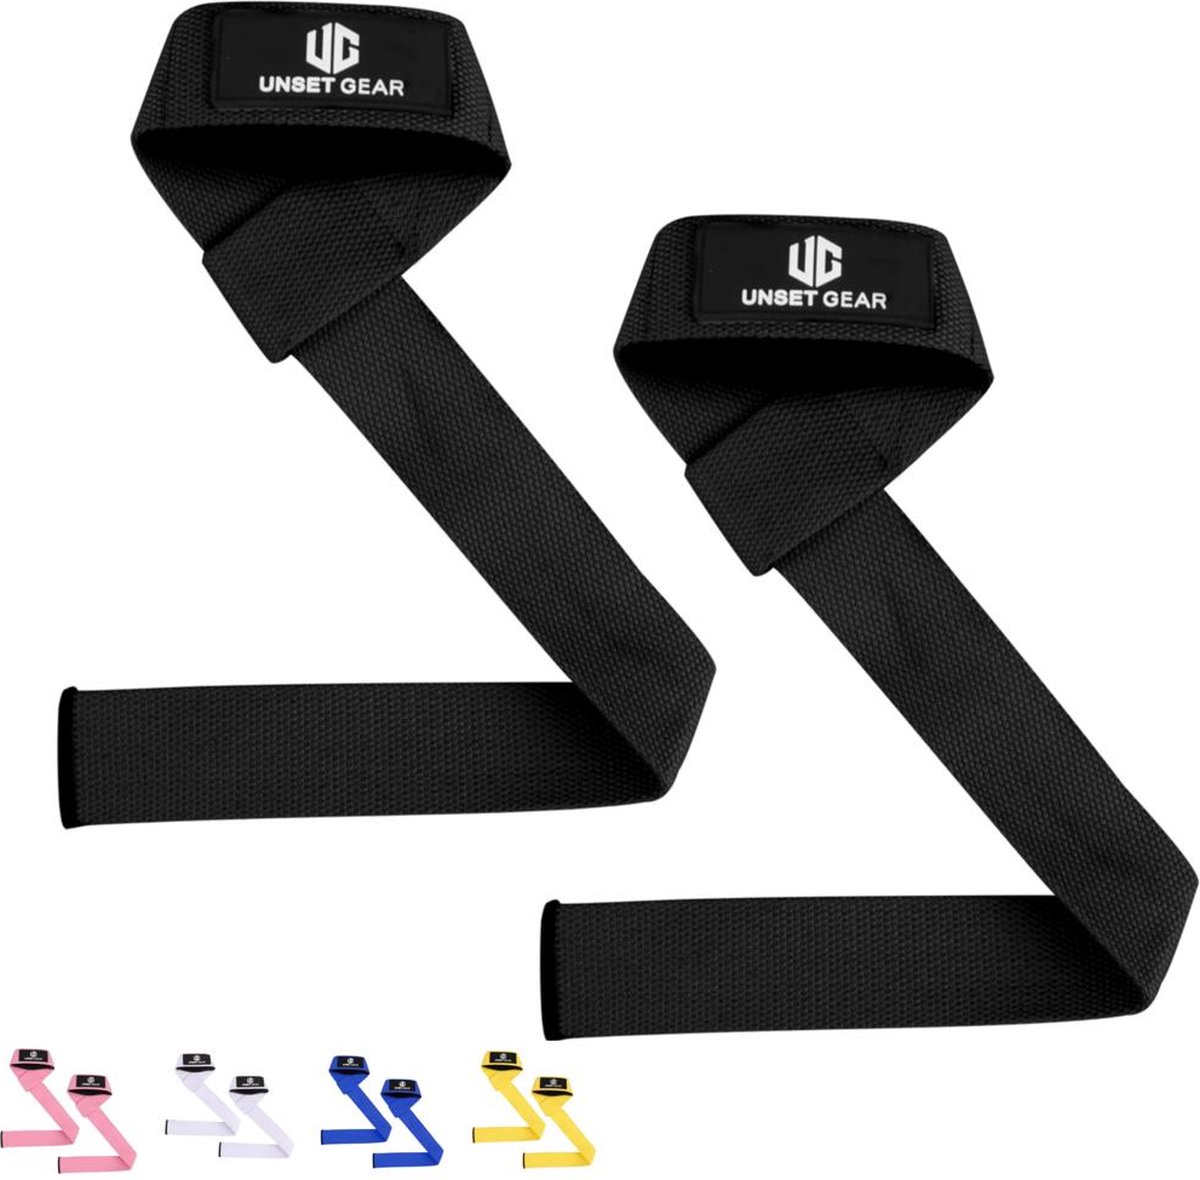 Unset Gear - Lifting straps - Zwart - Fitness - Powerliften - Extra grip - Bodybuilding